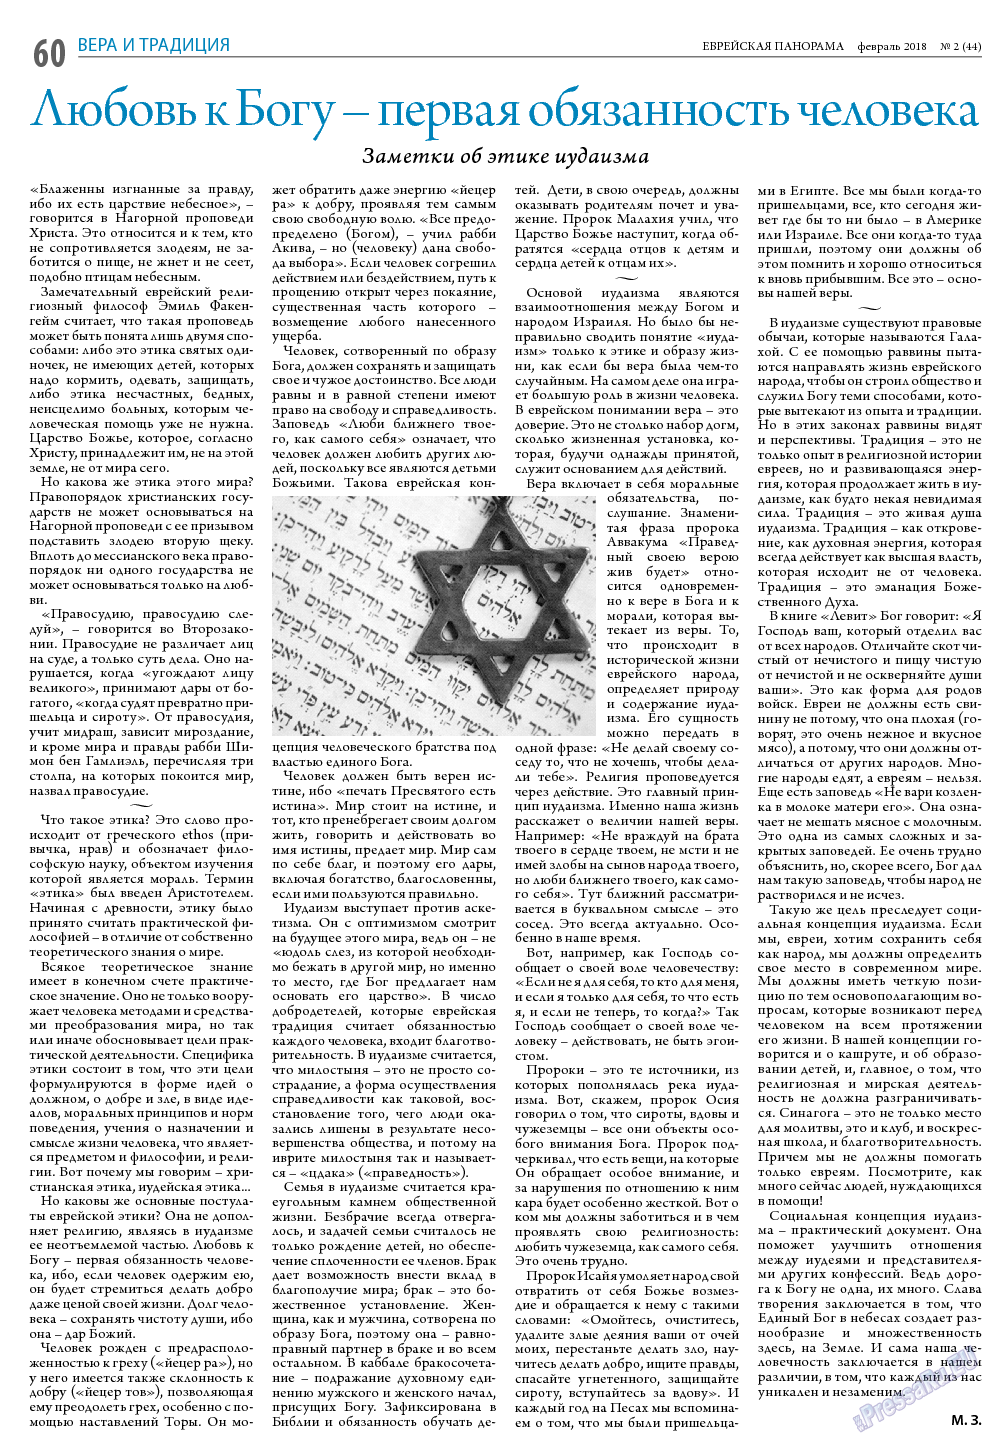 Еврейская панорама, газета. 2018 №2 стр.60